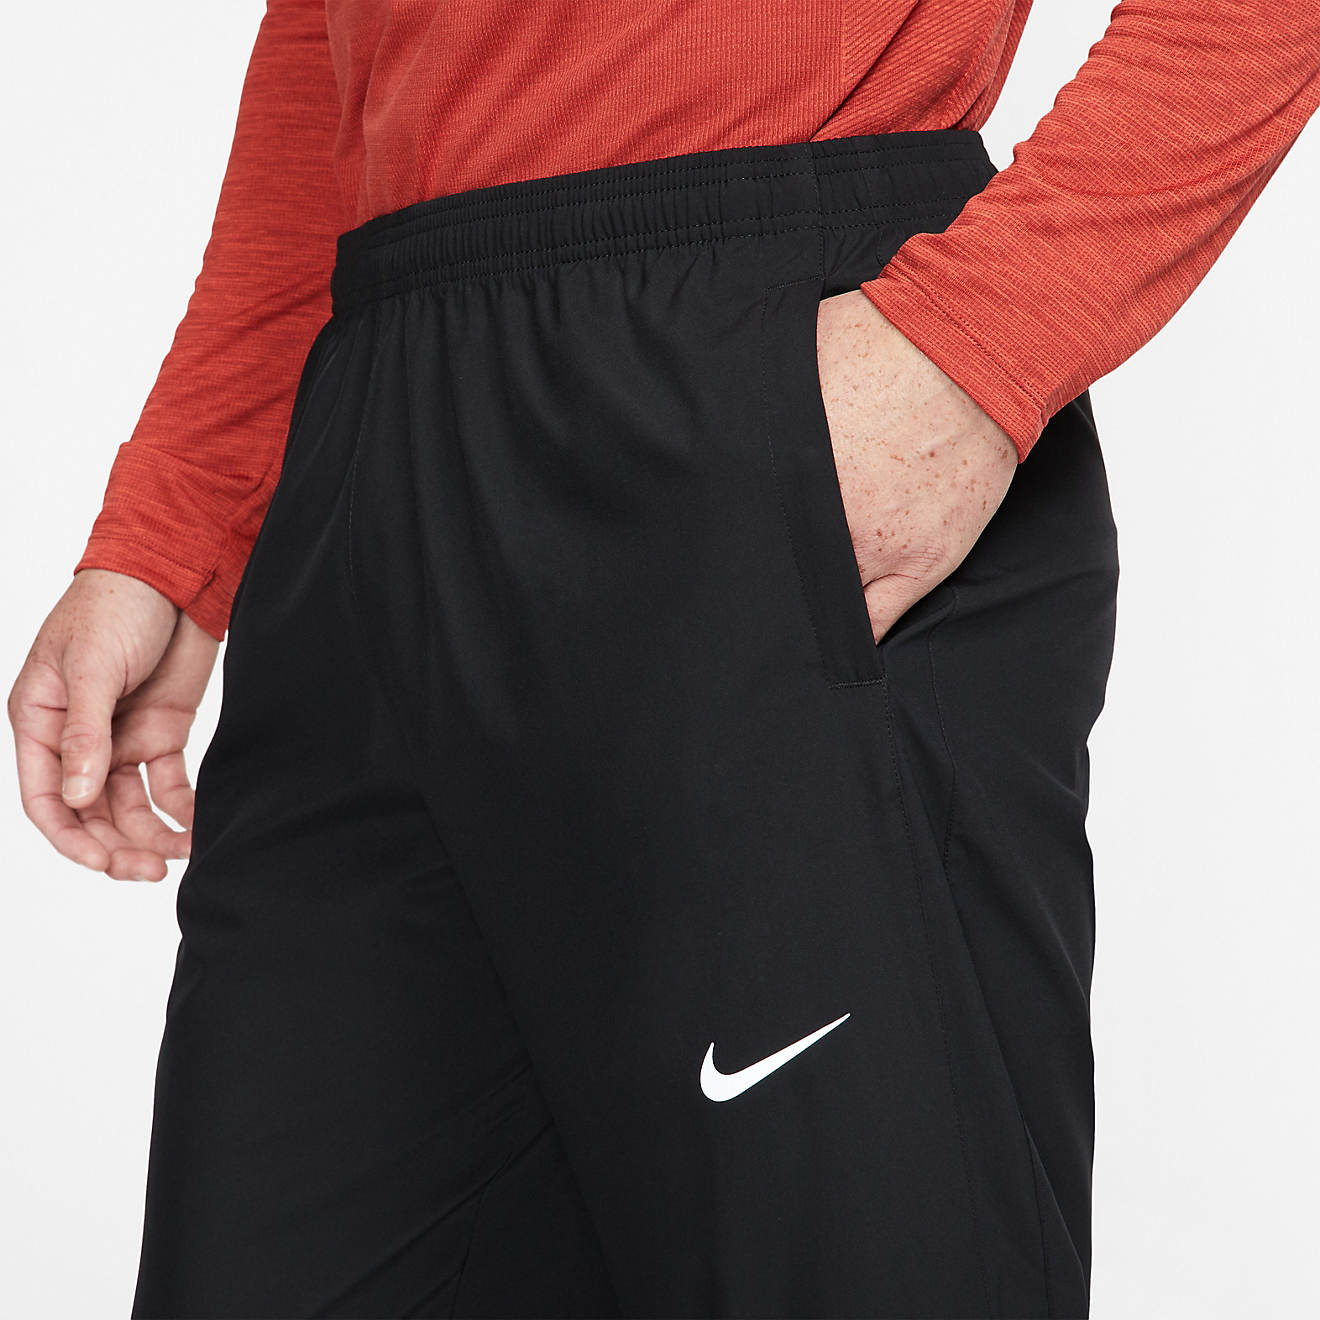 Nike Men's Woven Stripe Running Pants | Academy